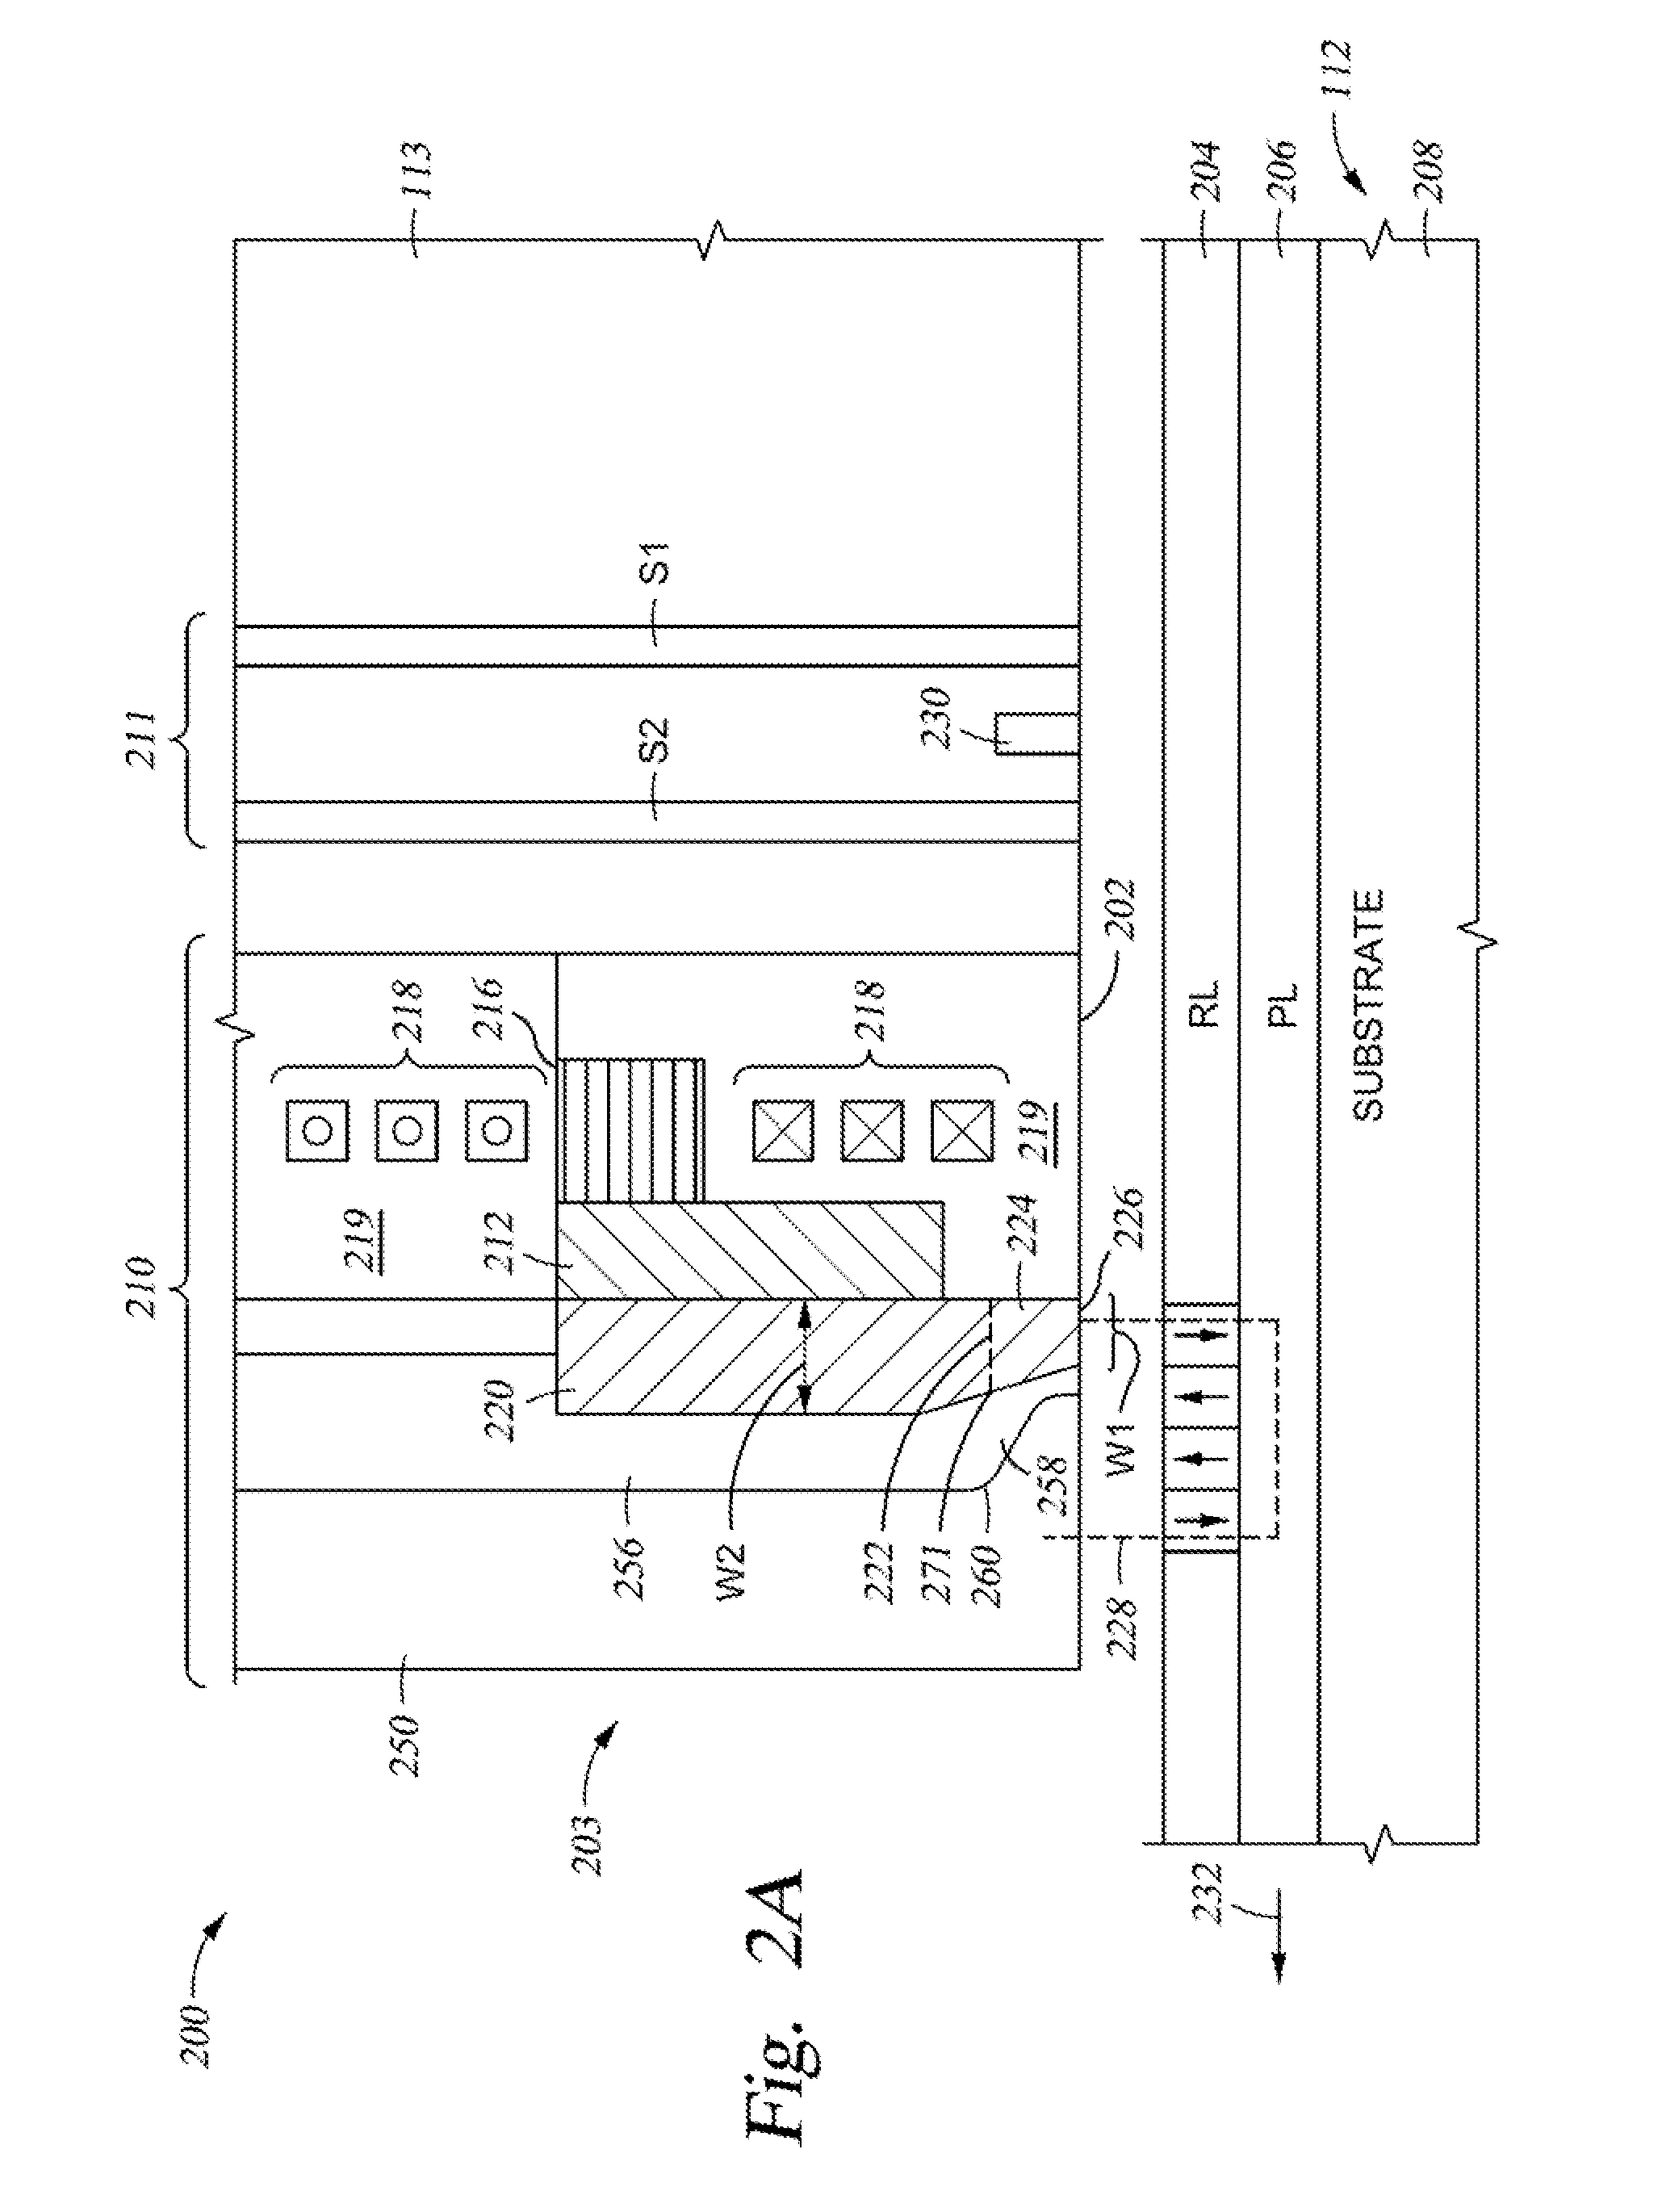 Underlayer for reference layer of polycrystalline CPP GMR sensor stack